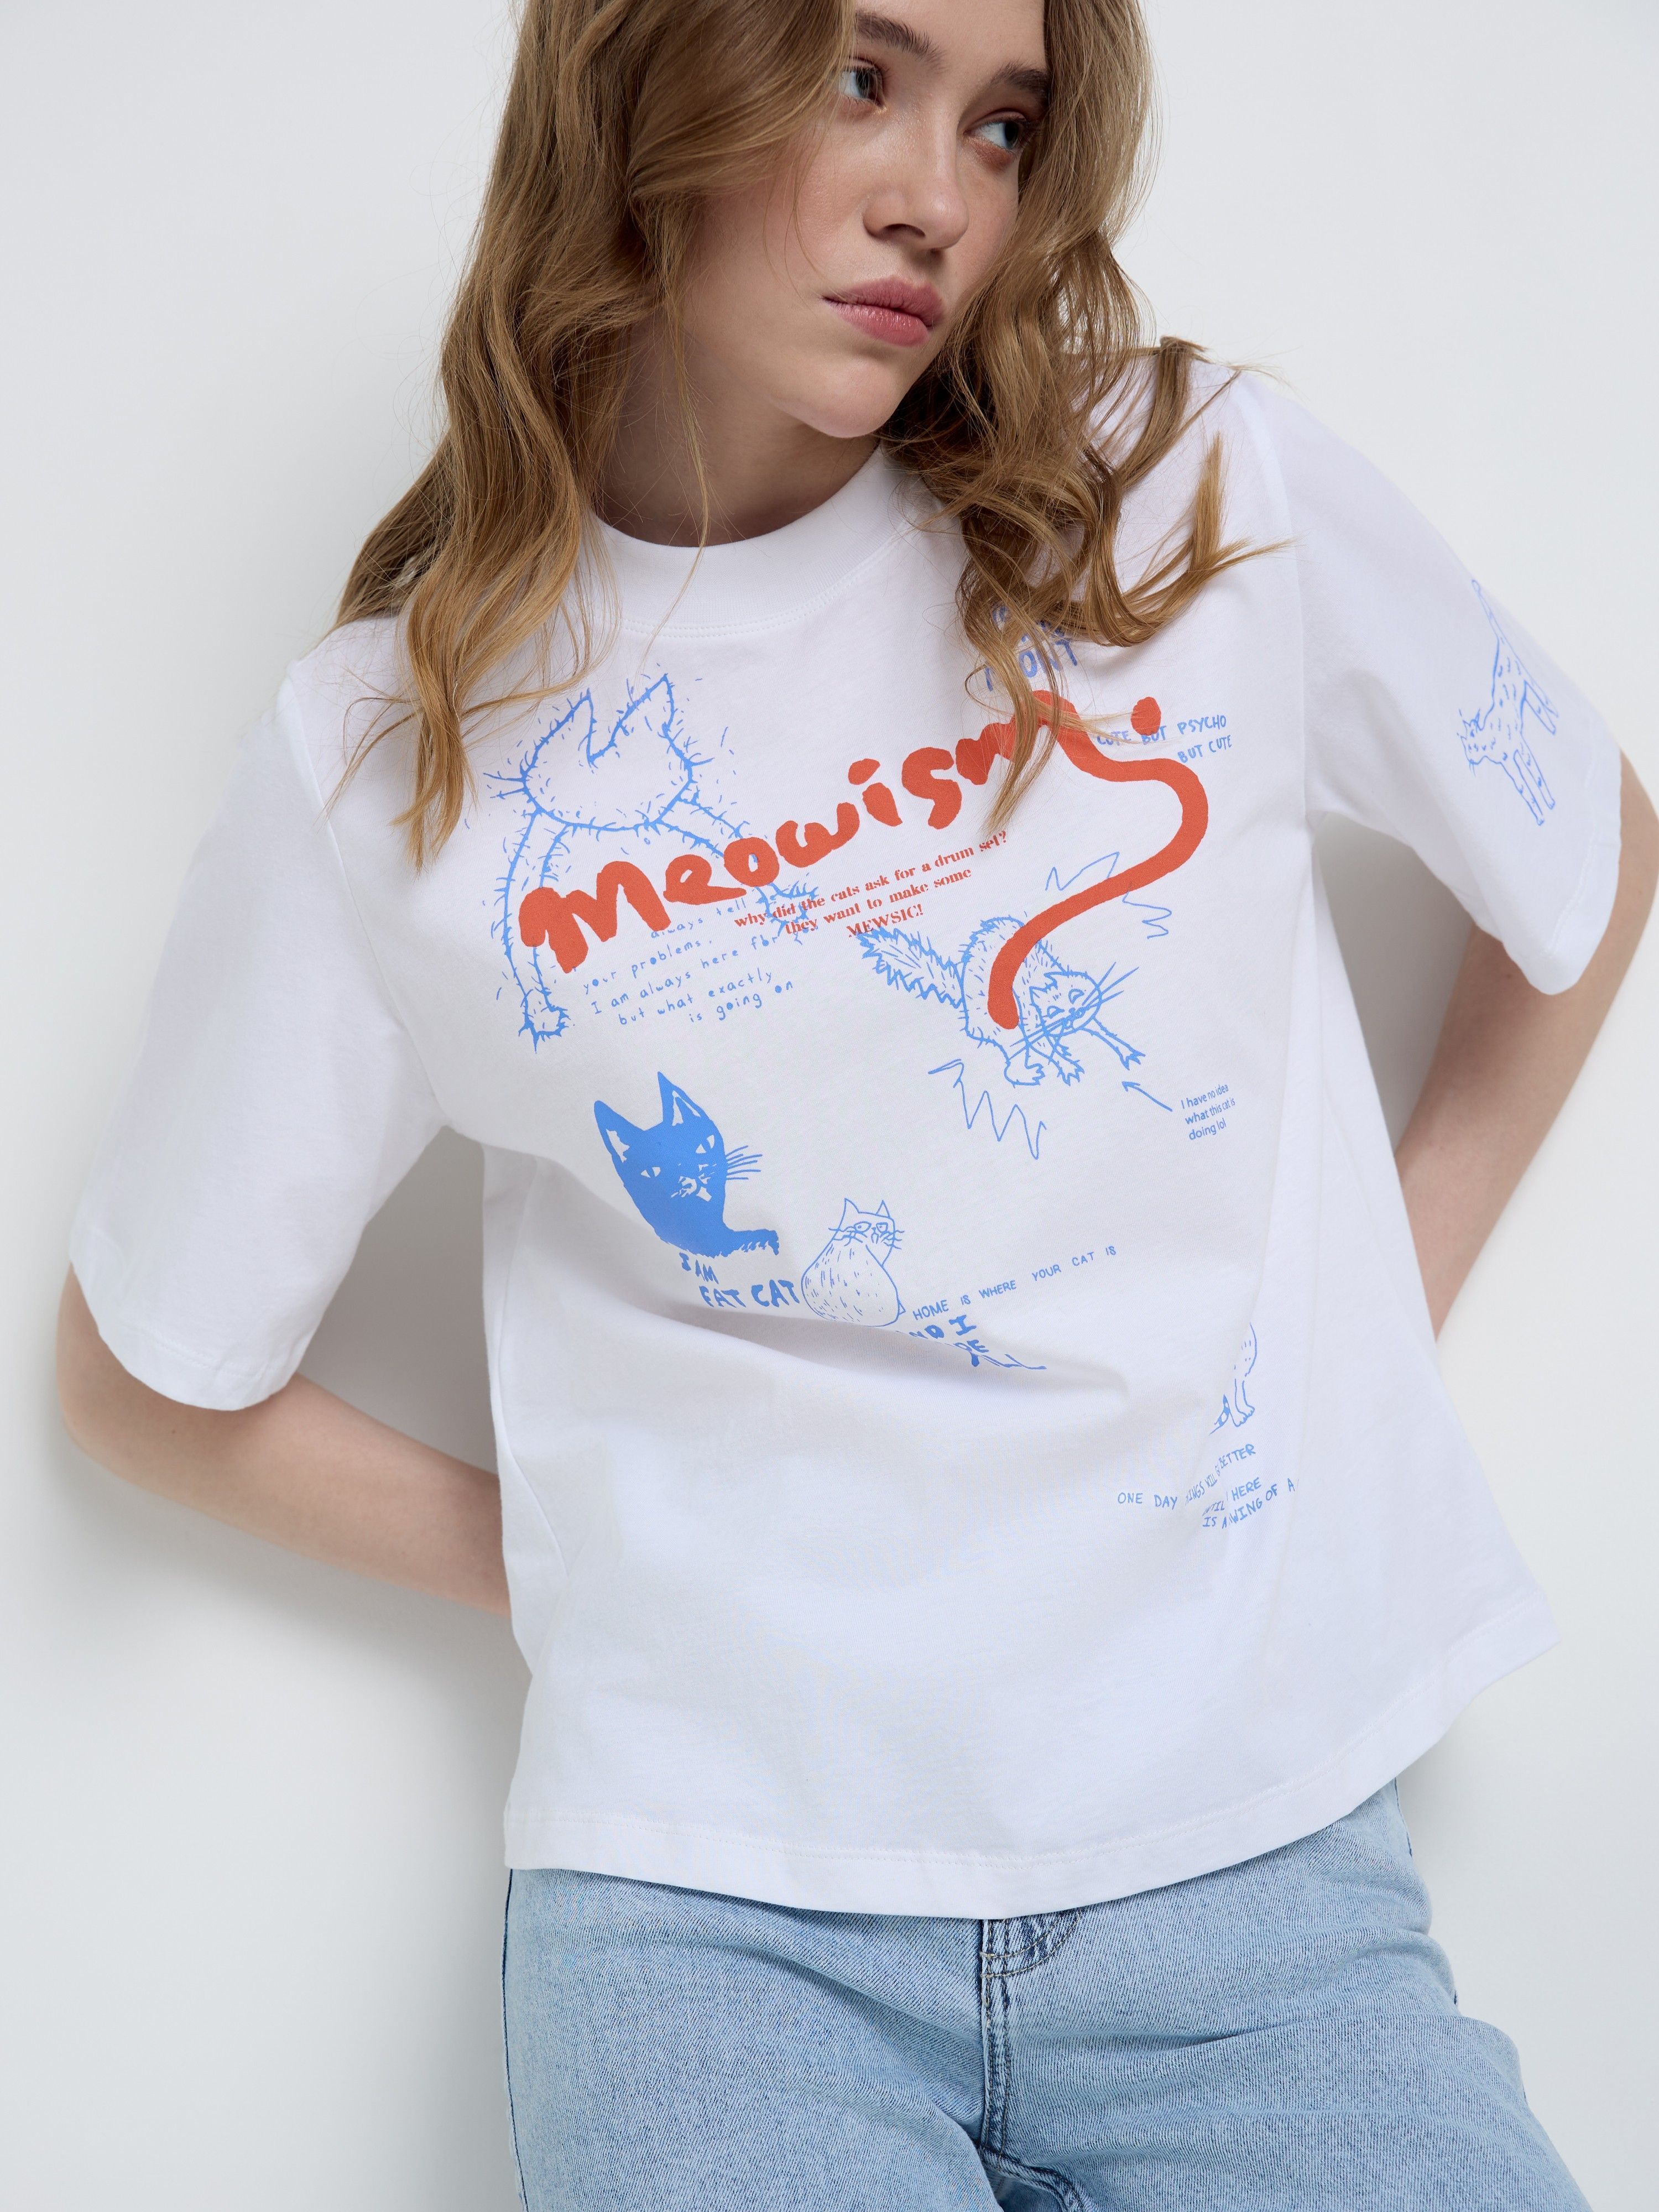 Свободная футболка из хлопка с рисунком «Mewoism» LD 2095 Conte ⭐️, цвет white, размер 170-100/xl